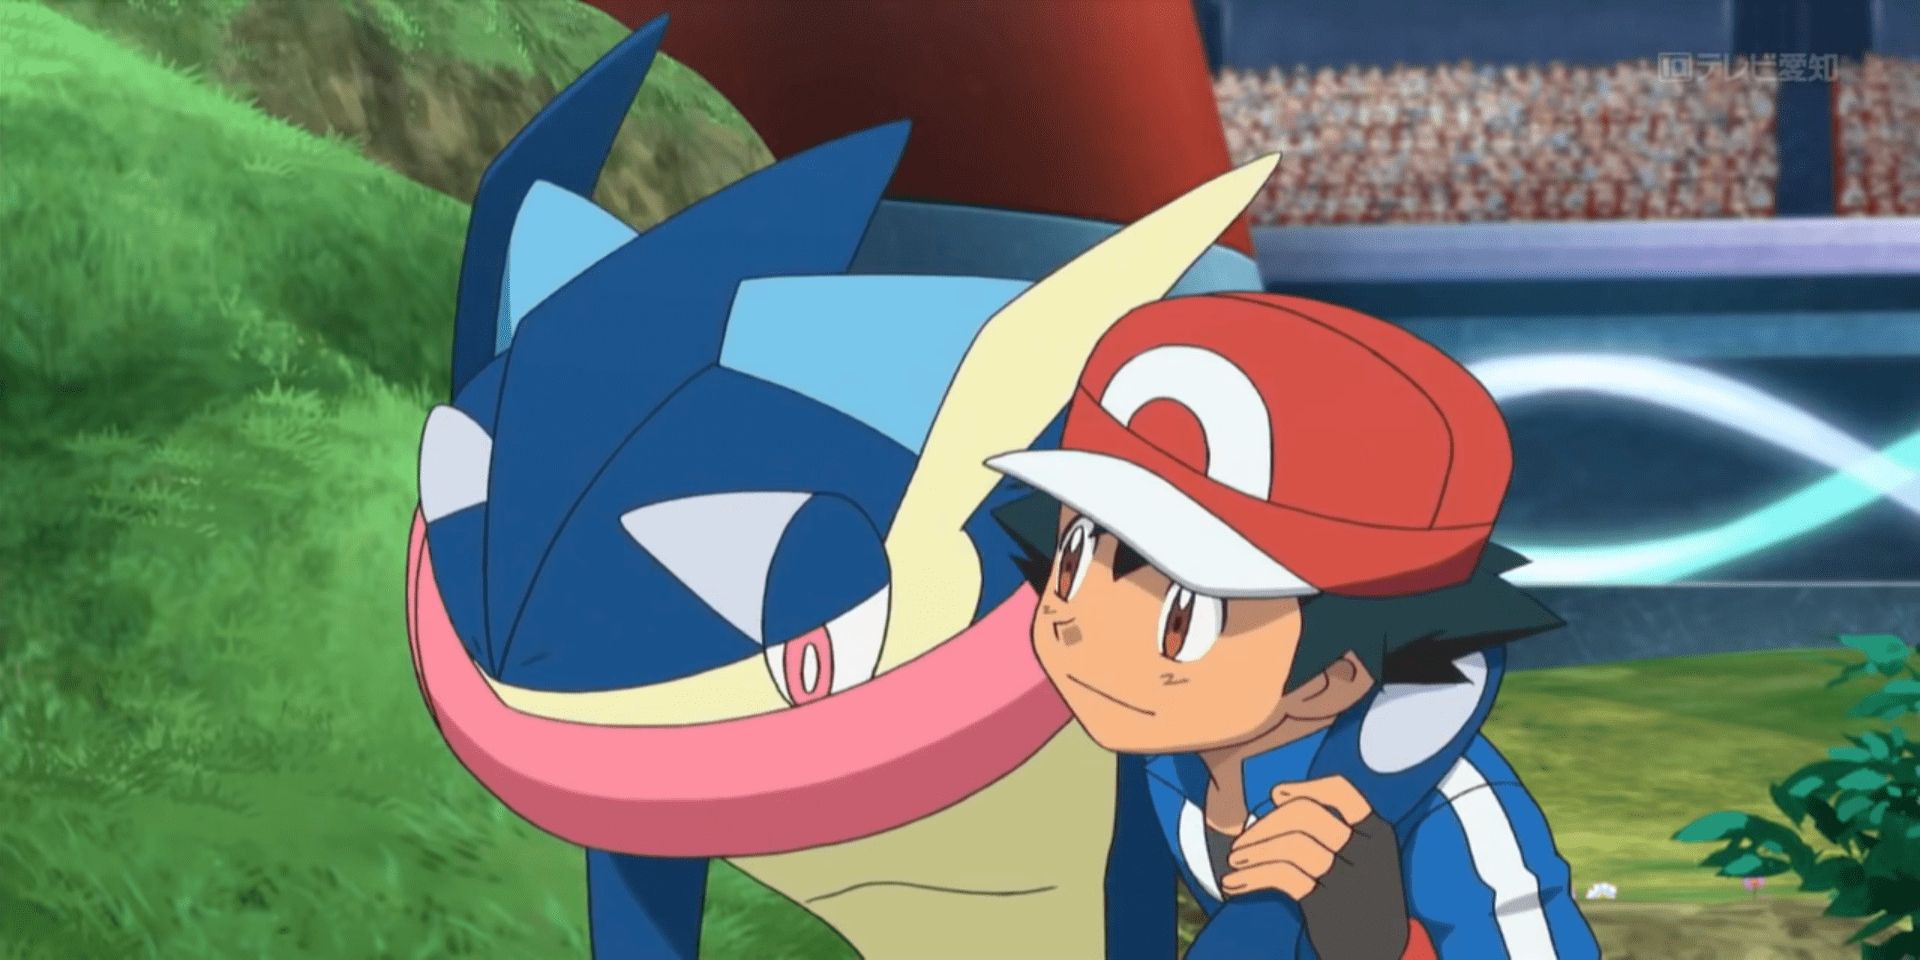 Ash with his Greninja in the Pokémon anime.